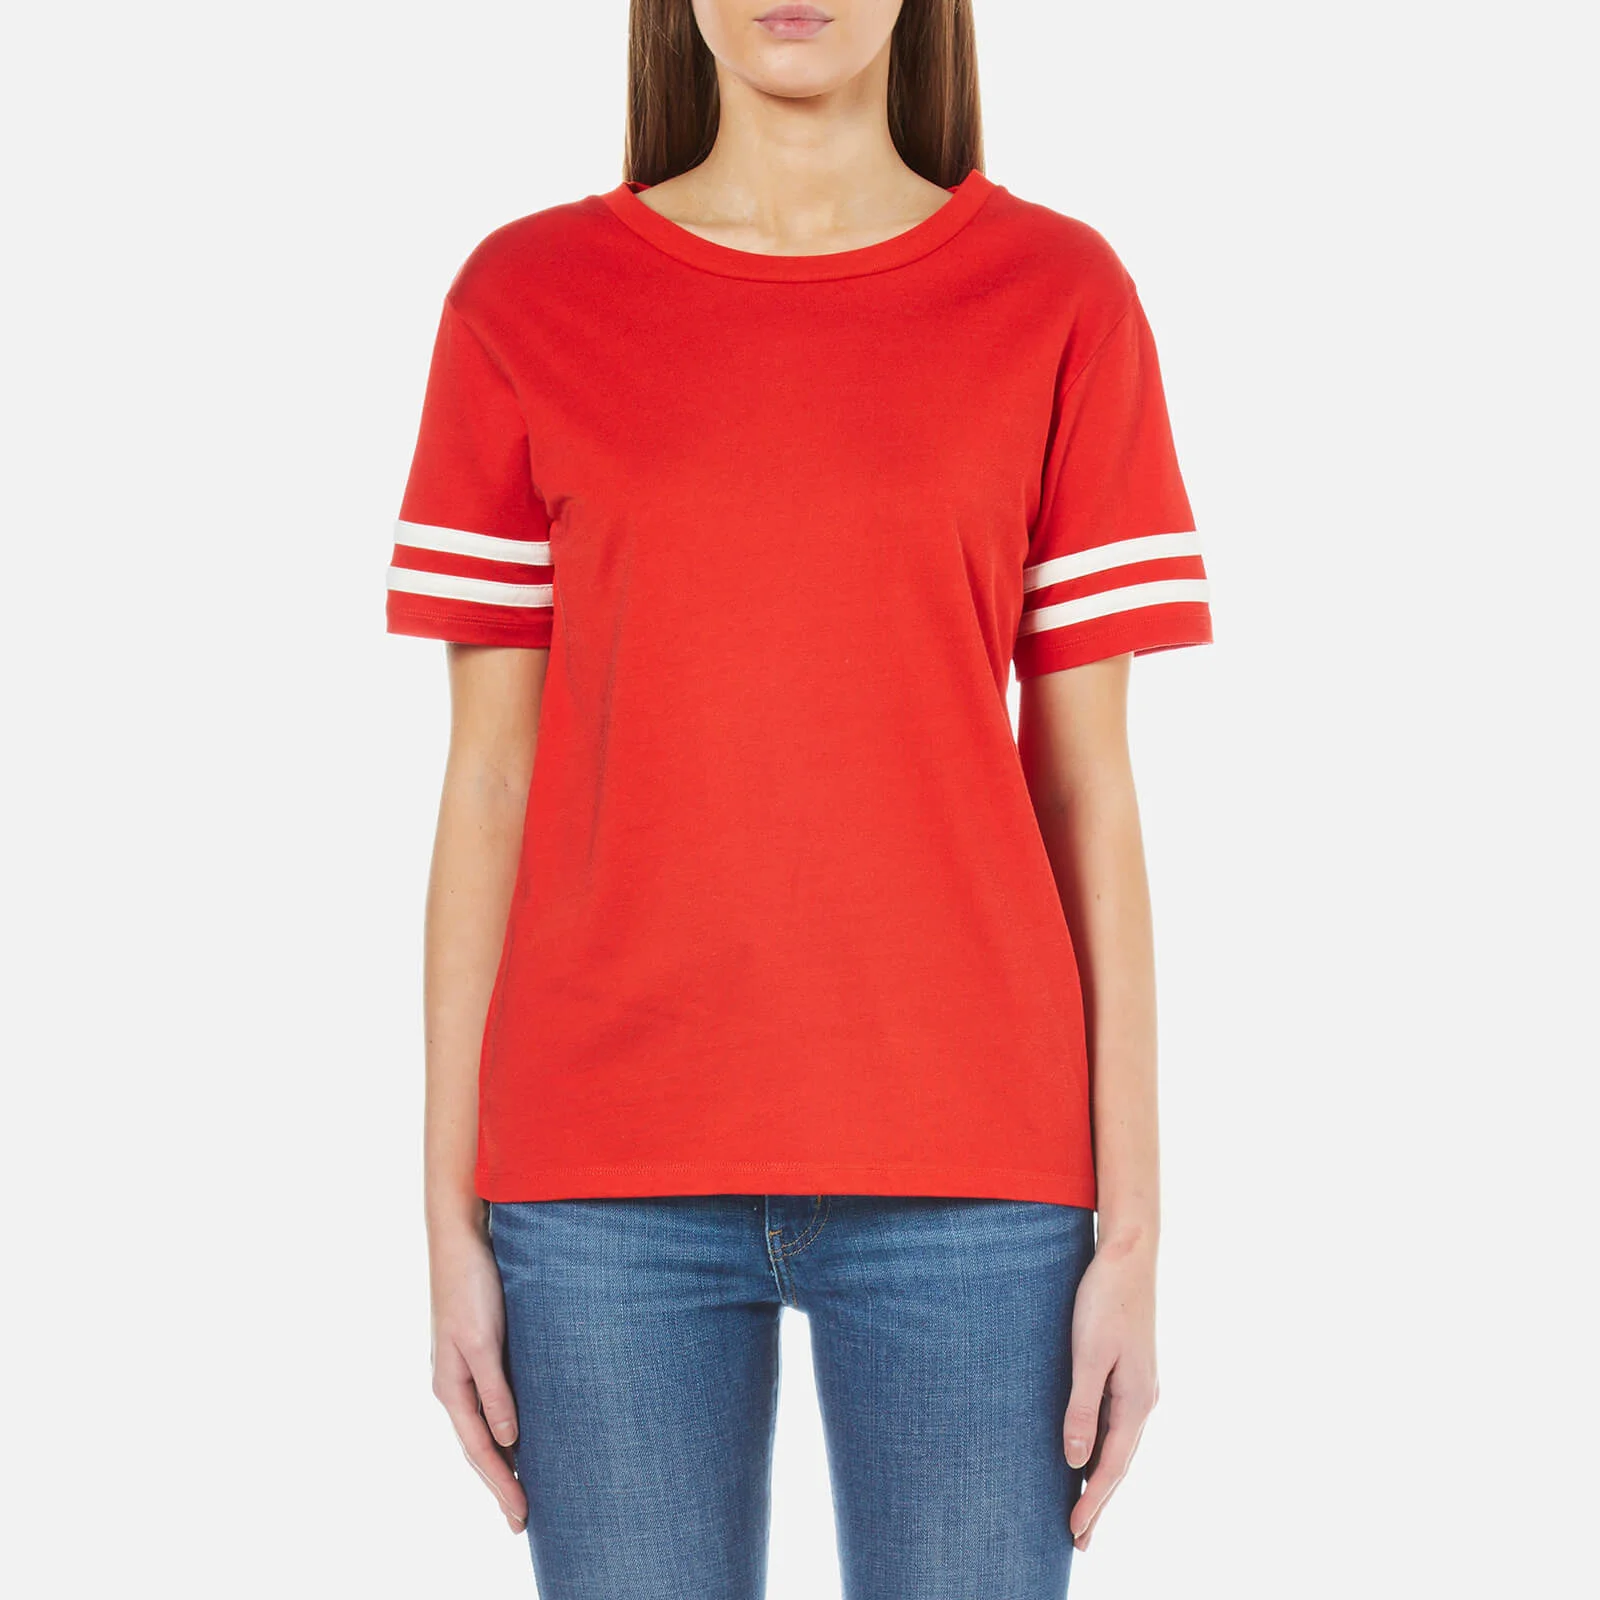 Levi's Women's Athletic T-Shirt - Flame Scarlet Image 1